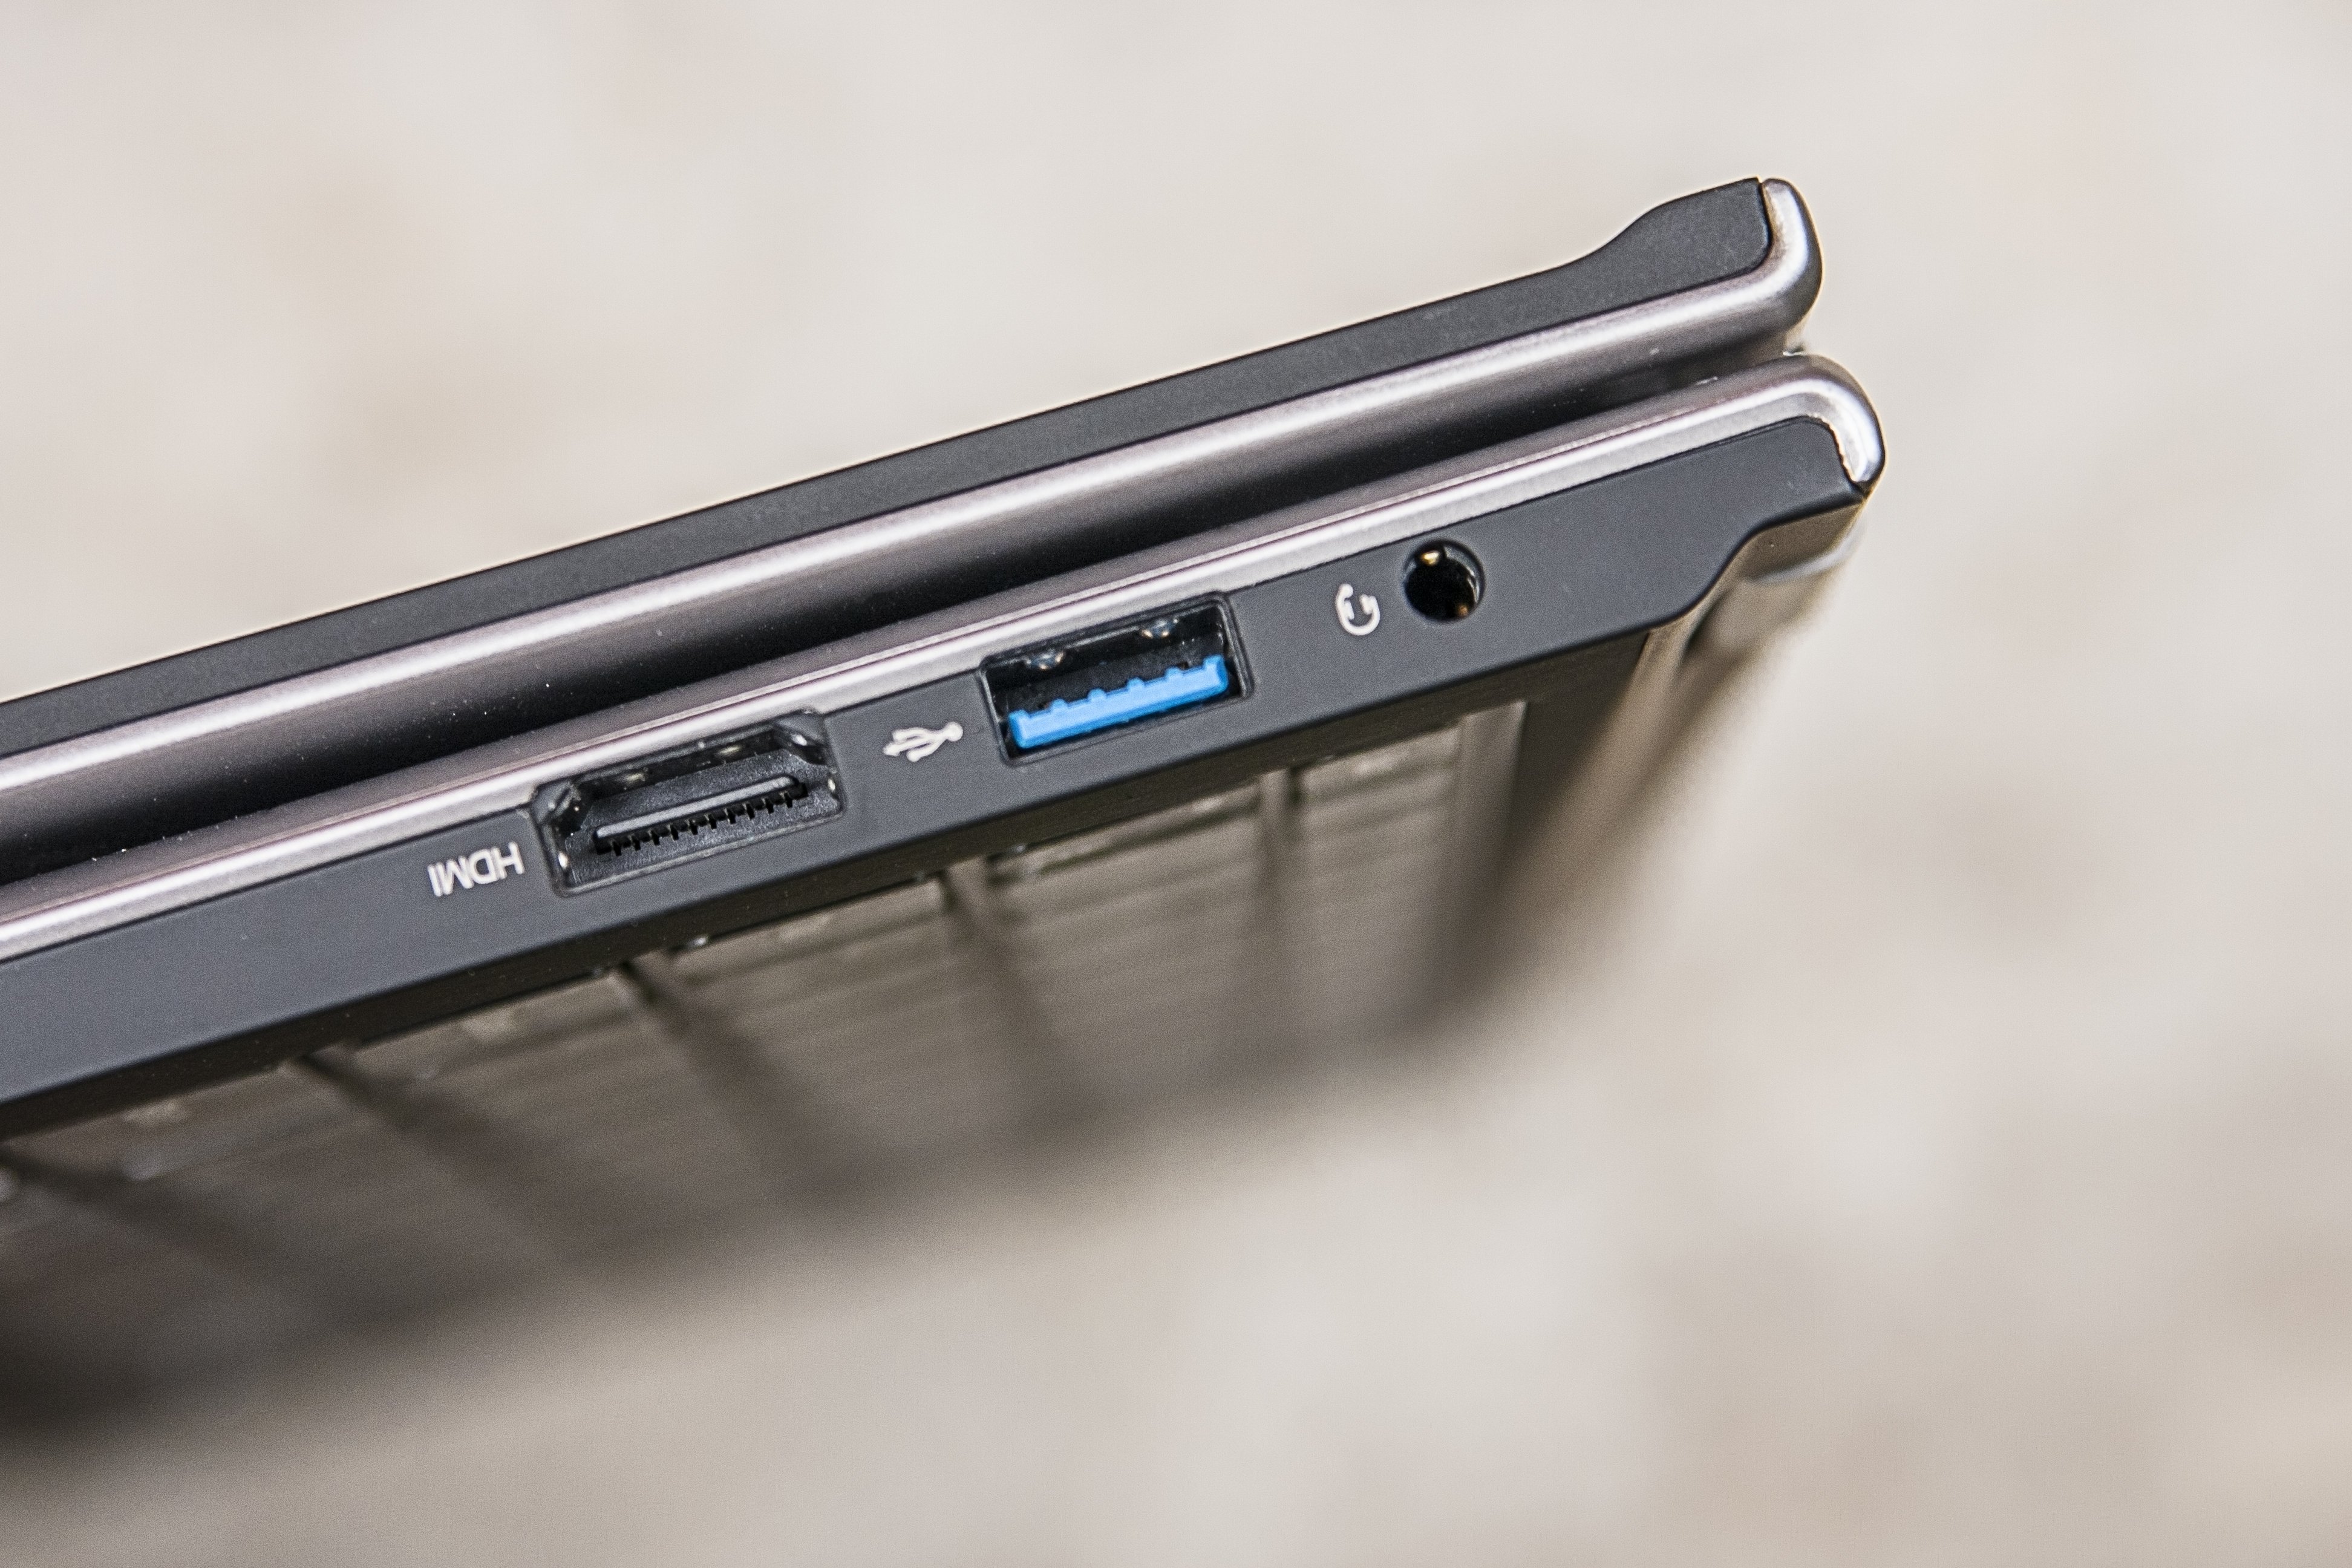 Lenovo IdeaPad Yoga 11s: гибкий во всех отношениях